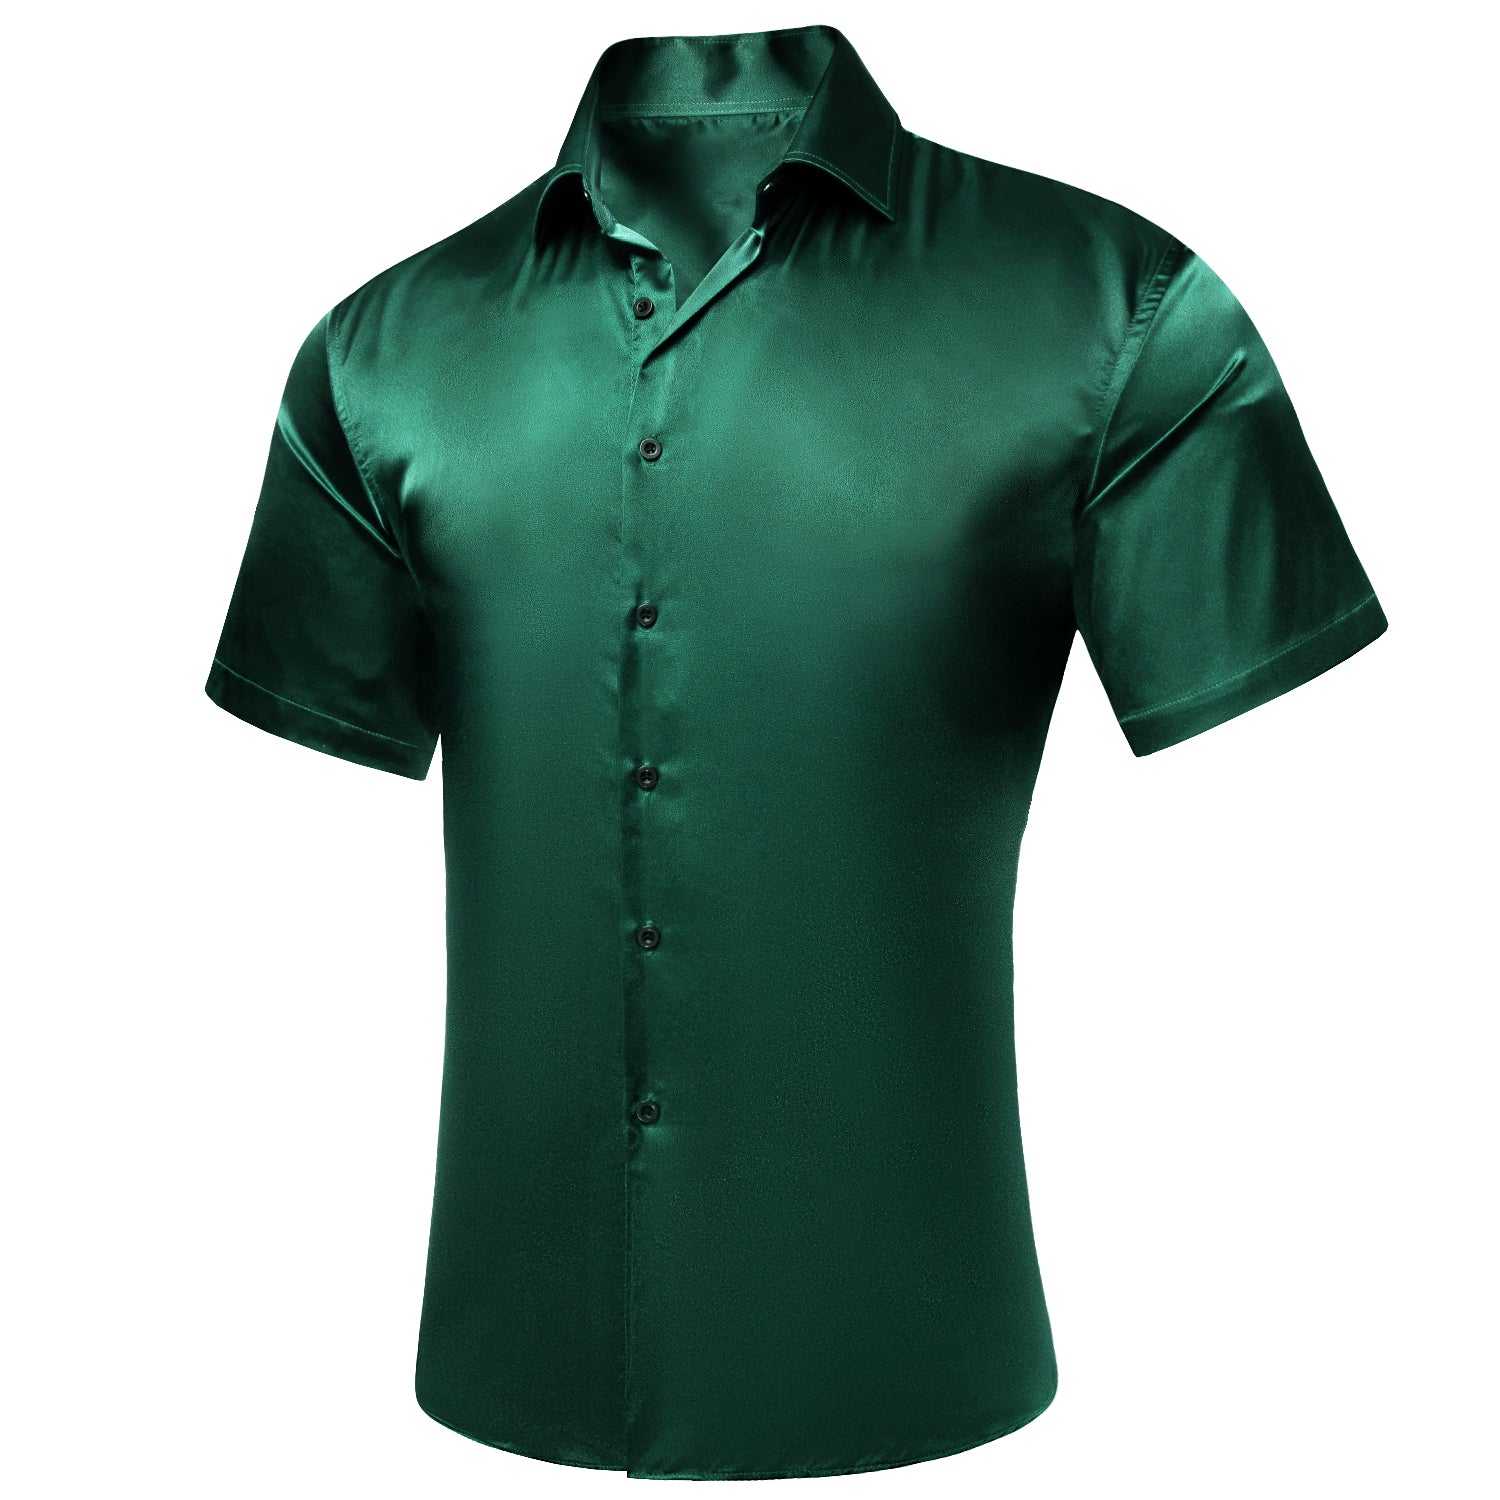 New Emerald Green Solid Satin Men's Short Sleeve Shirt